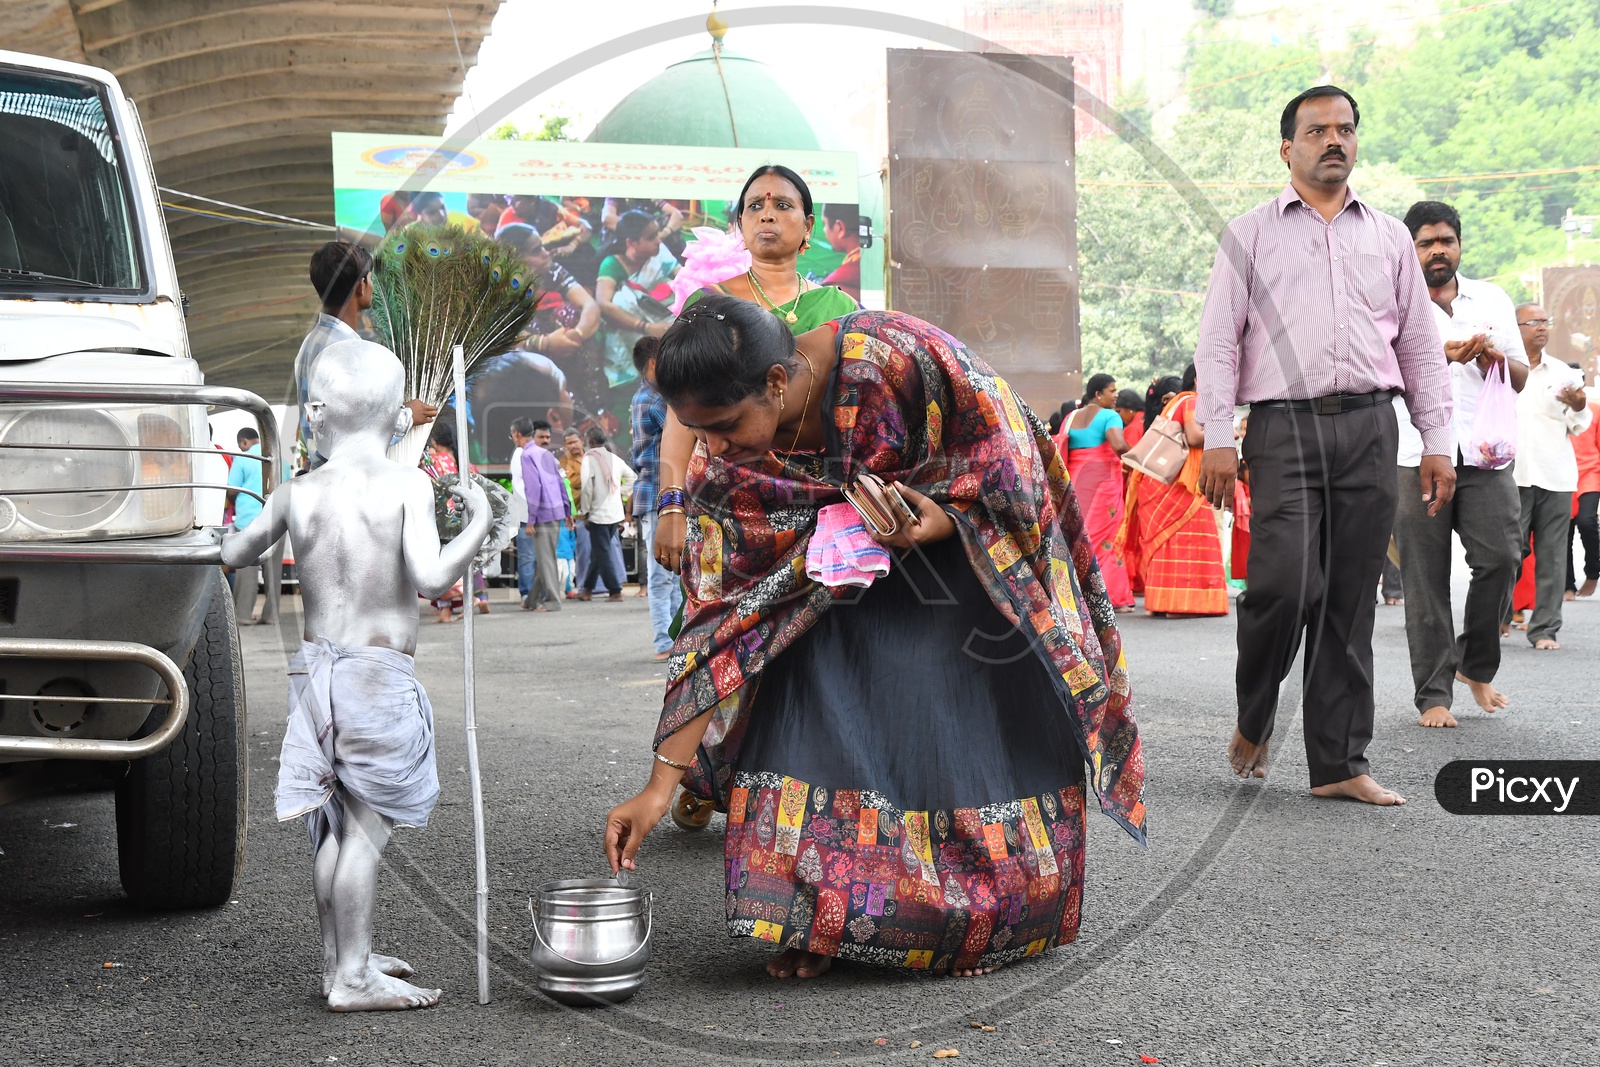 A Kid Painted as Mahatma Gandhi begging on streets